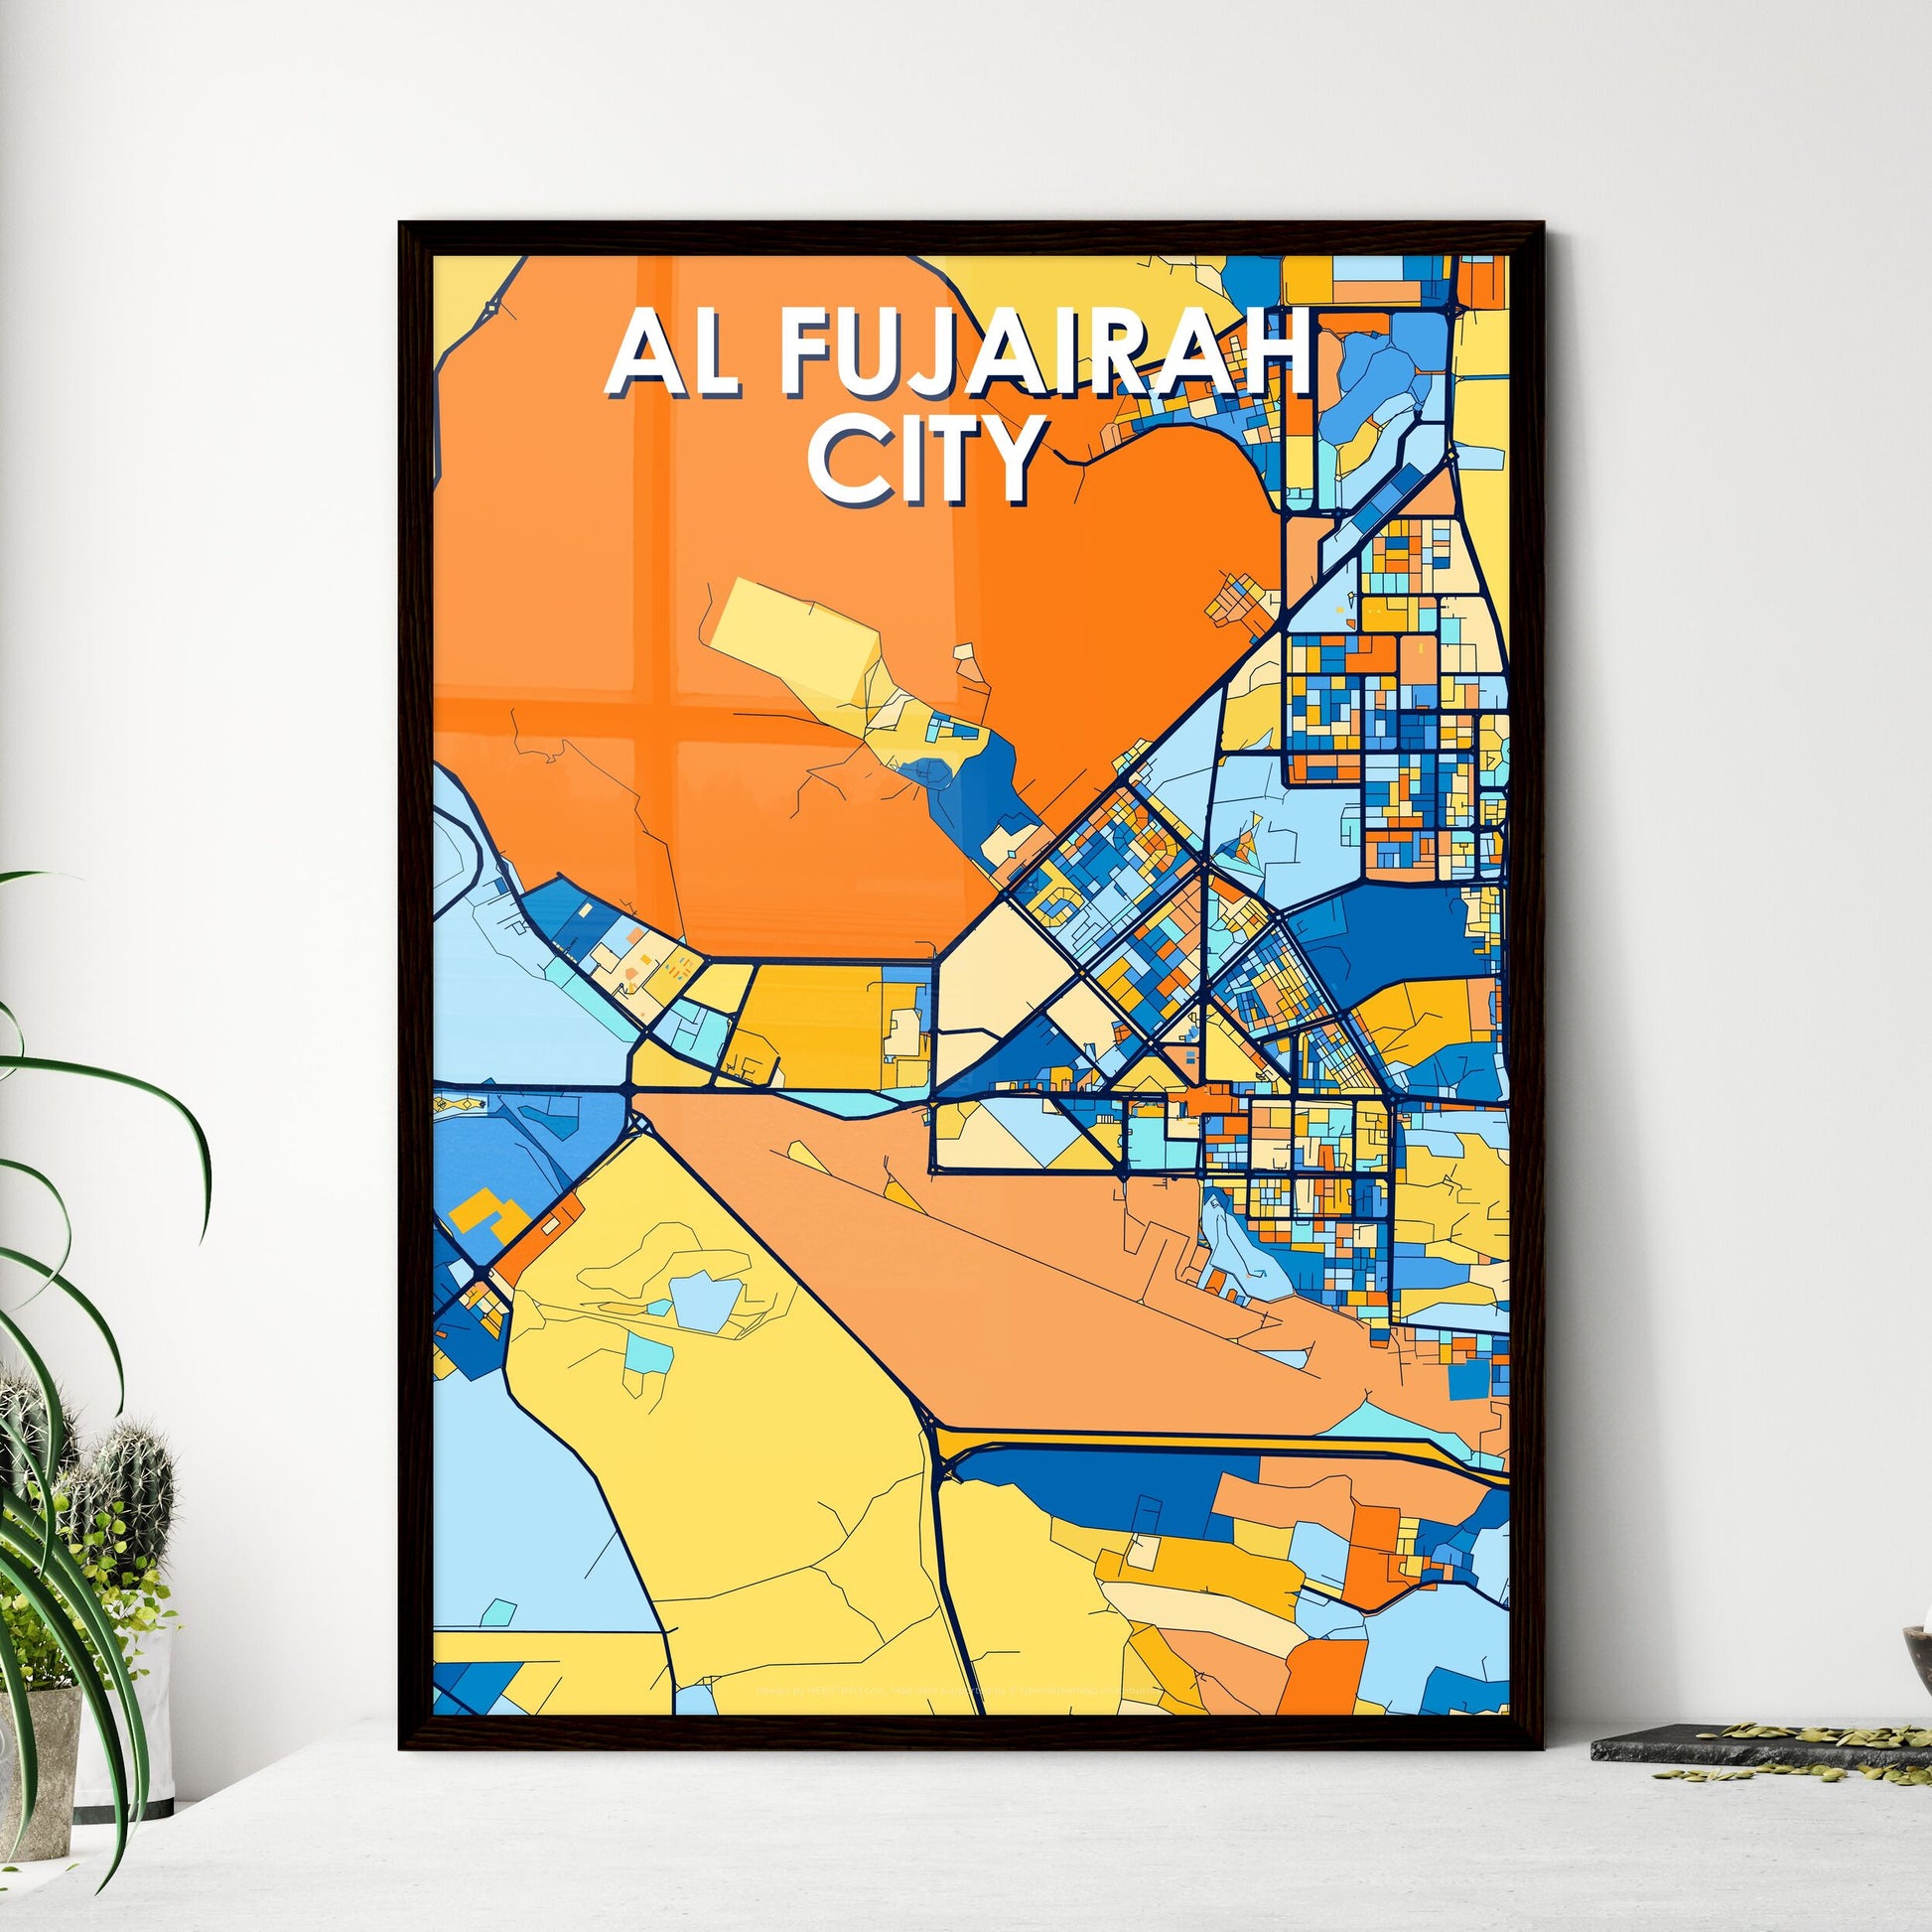 Al Fujairah City , United Arab Emirates - modern street map poster